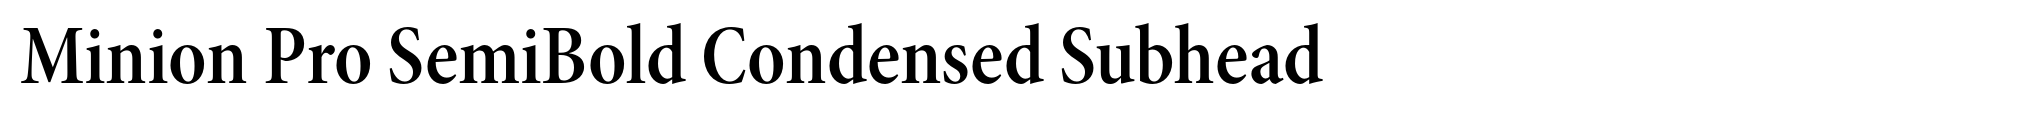 Minion Pro SemiBold Condensed Subhead image